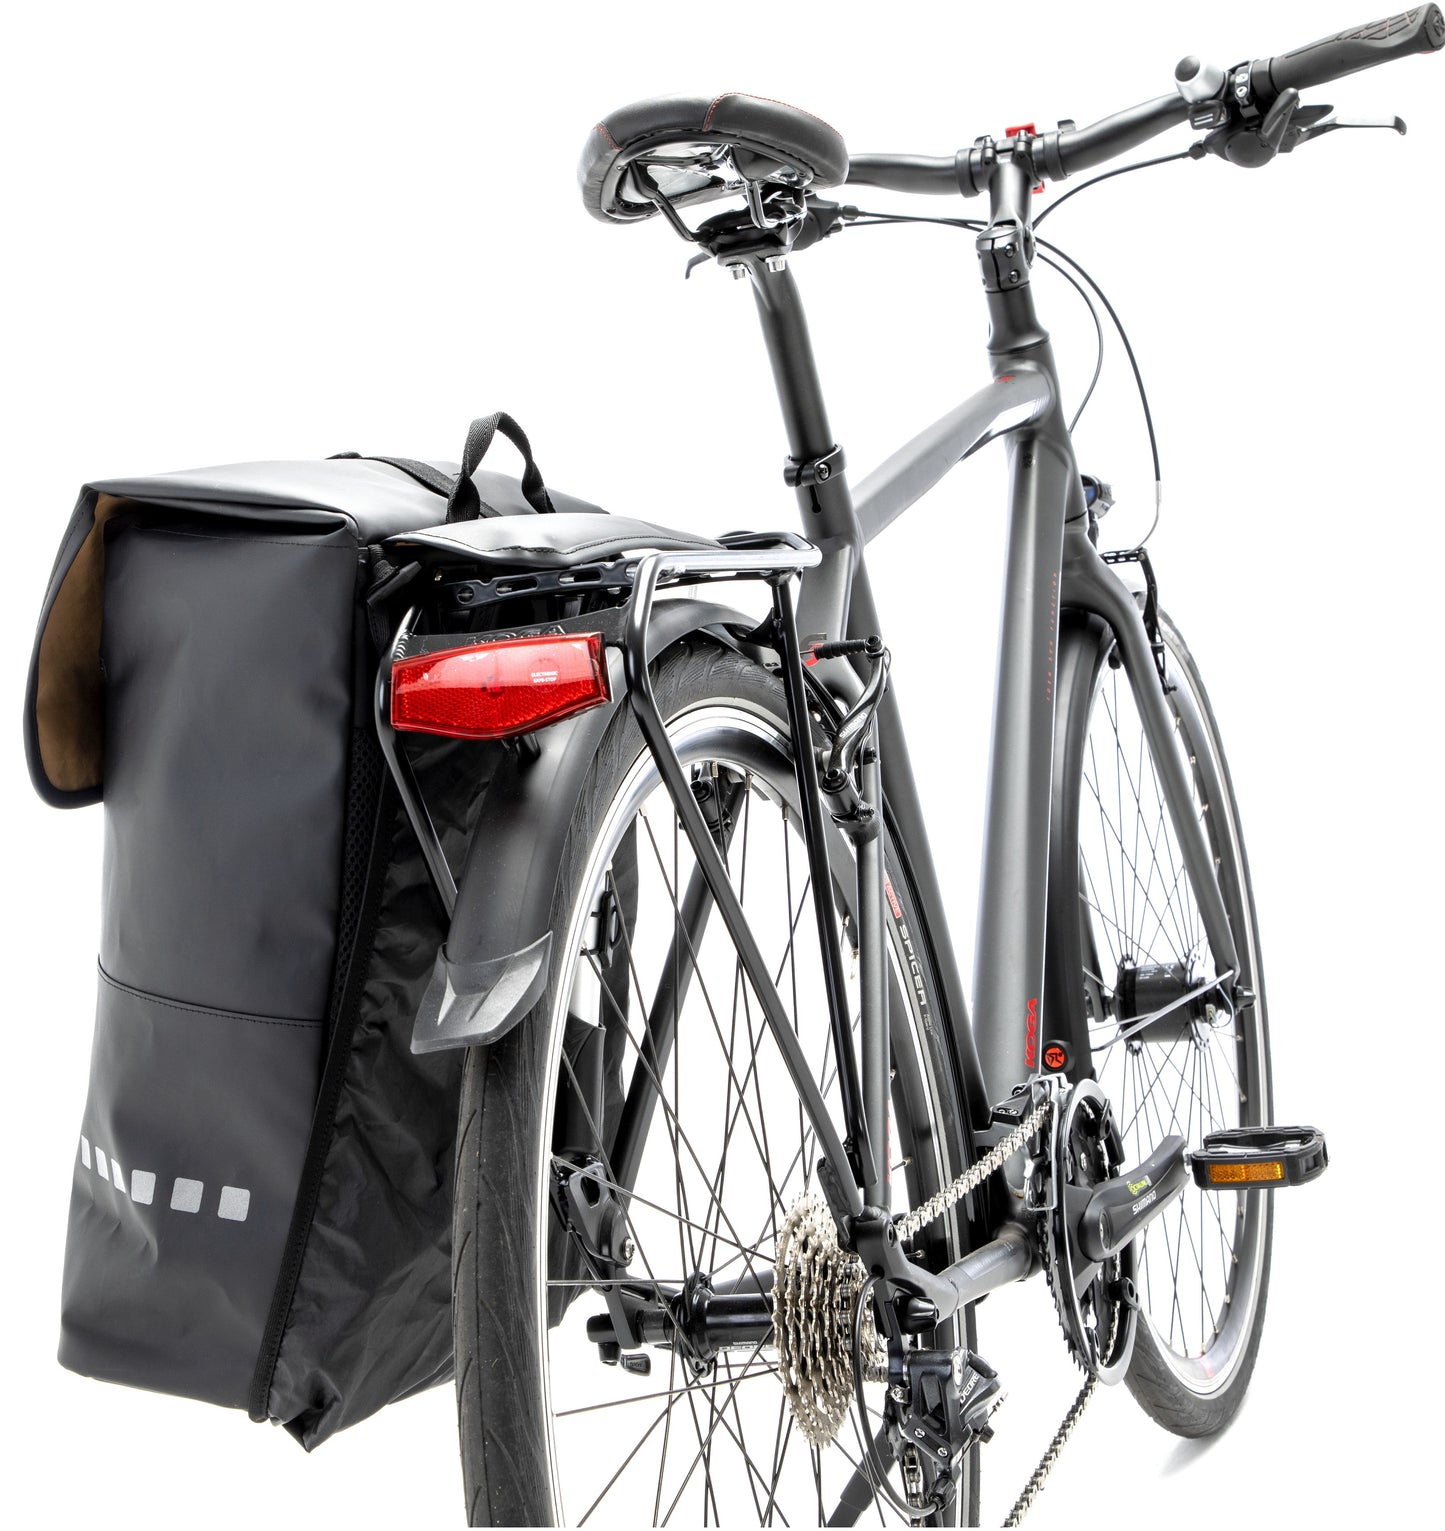 Mochila odiente - mochila resistente para bicicleta - verde negro